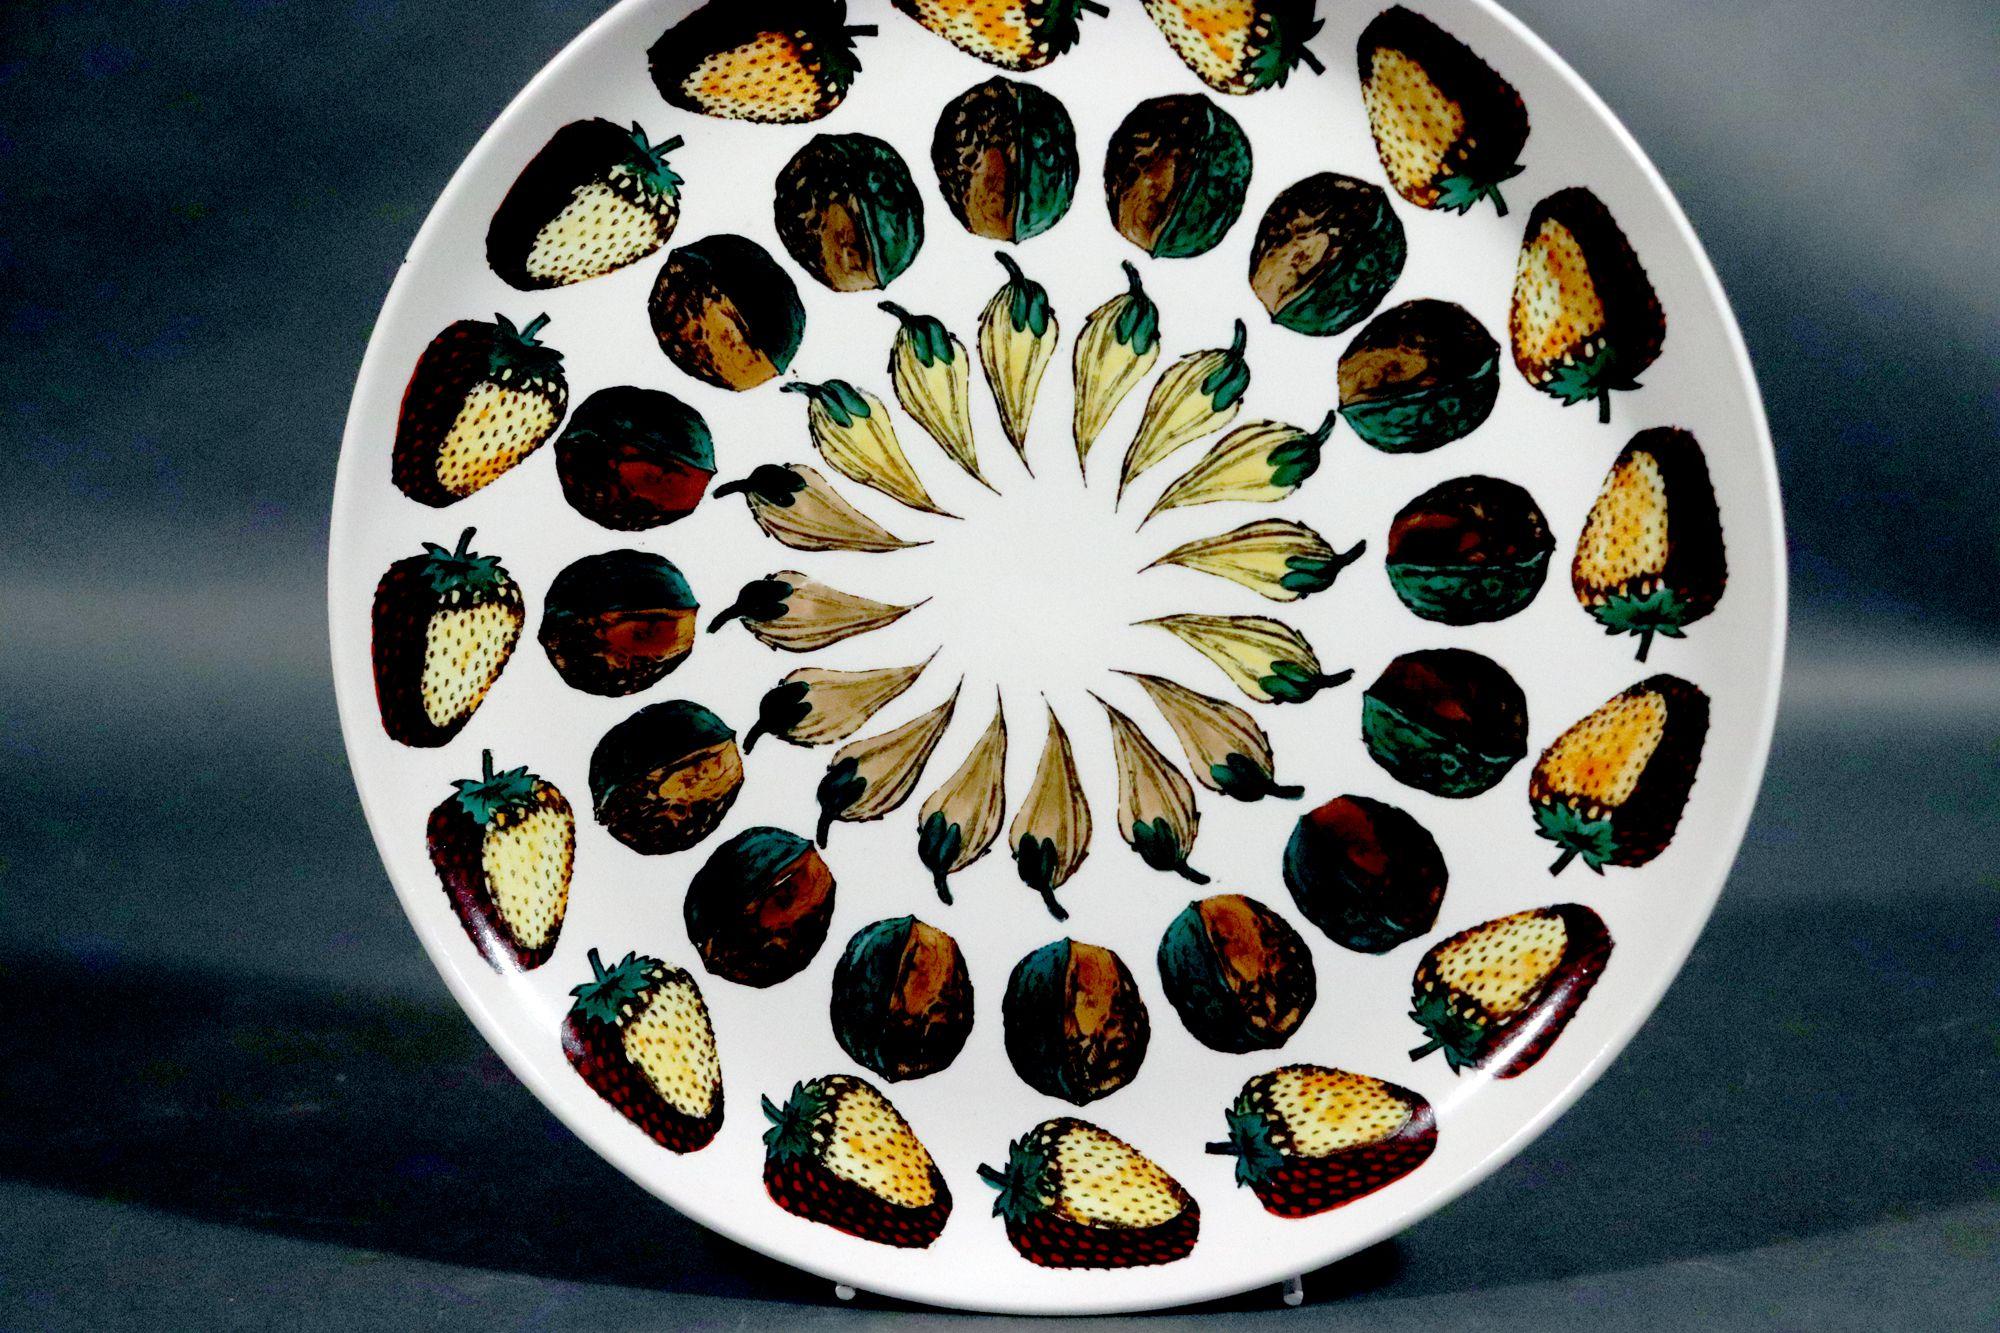 Piero Fornasetti Porcelain Plates, Giostra di Frutta (Merry-go-Round of Fruit) For Sale 14